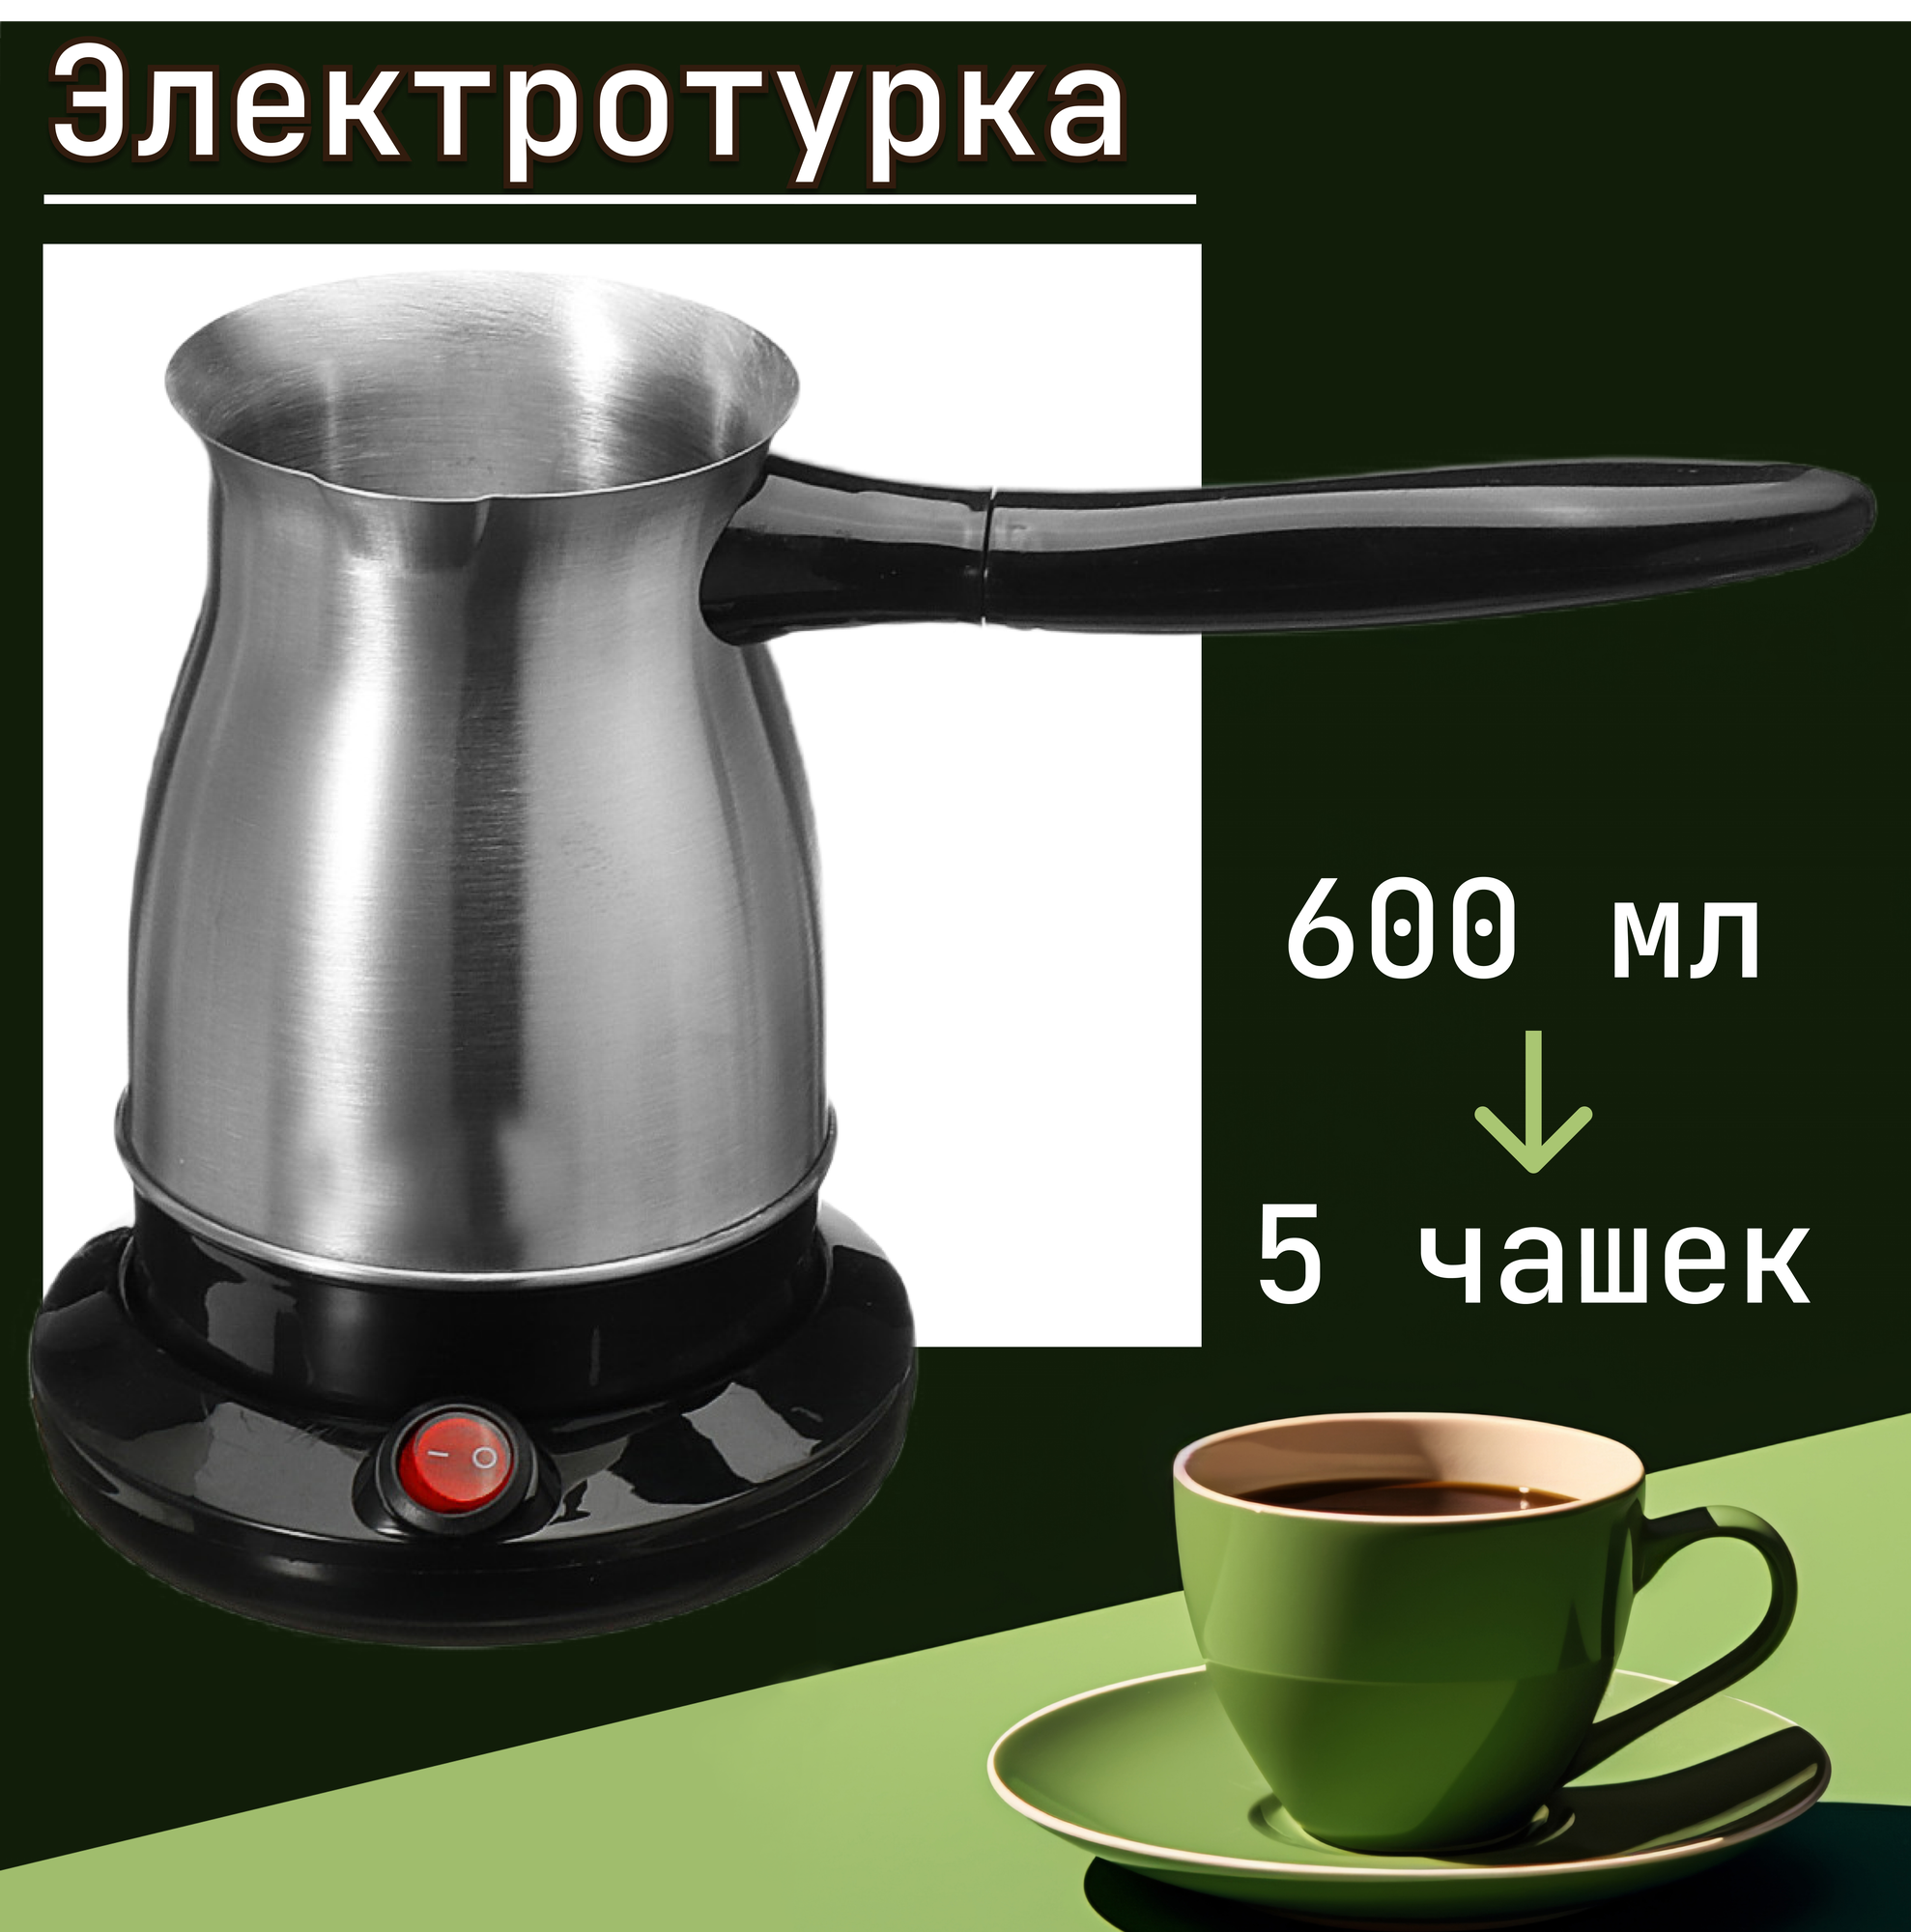 Электрическая турка 600 мл из металла / Электротурка для кофе или чая / Электрическая кофеварка кофейник для дома и офиса